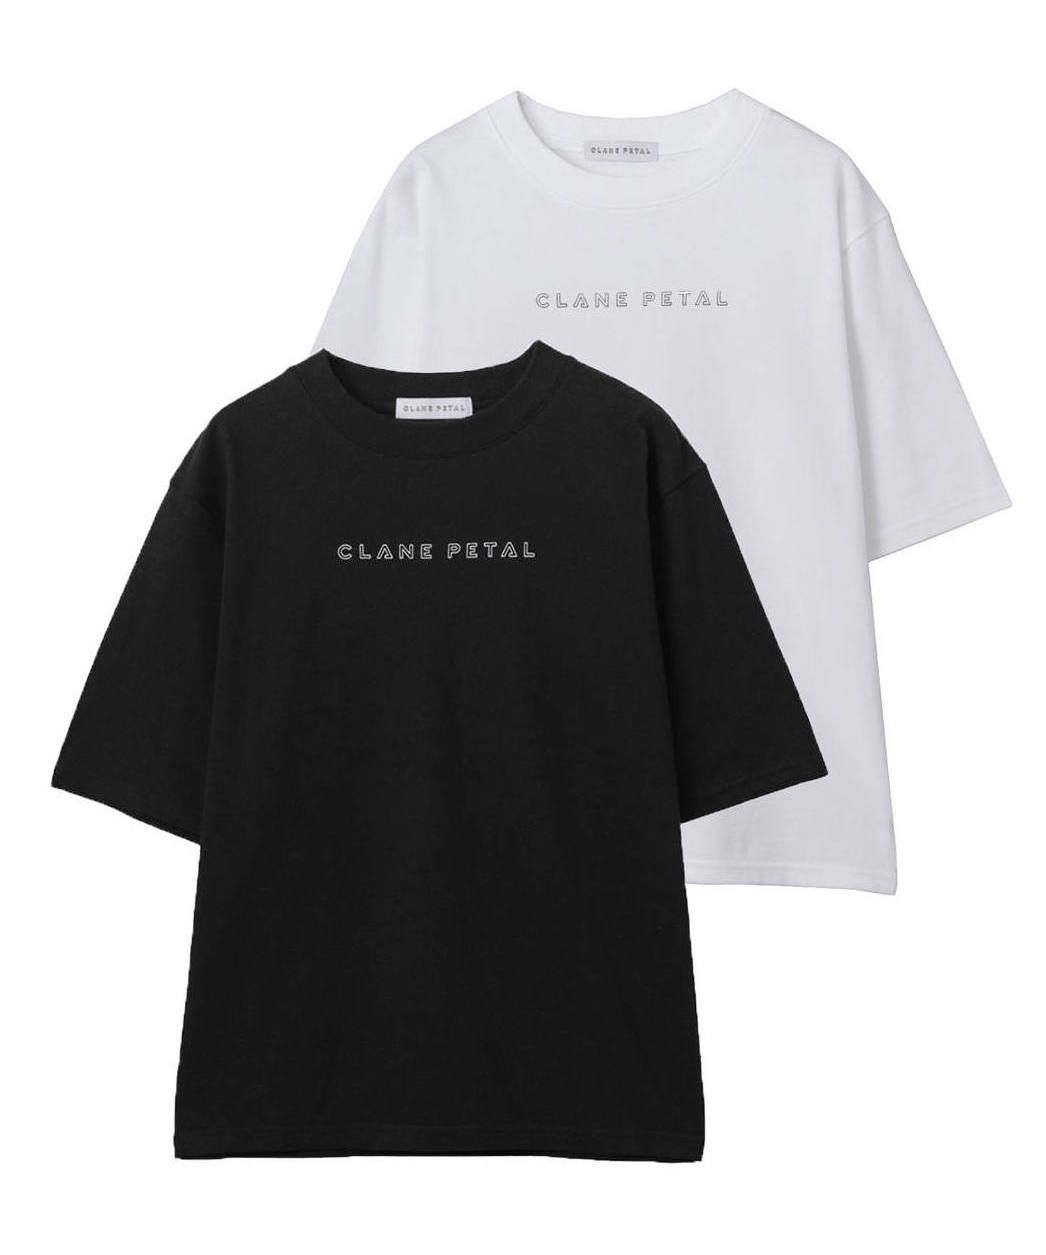 CLANE PETAL - クラネペタルパックTシャツ - CLANE PETAL PACK